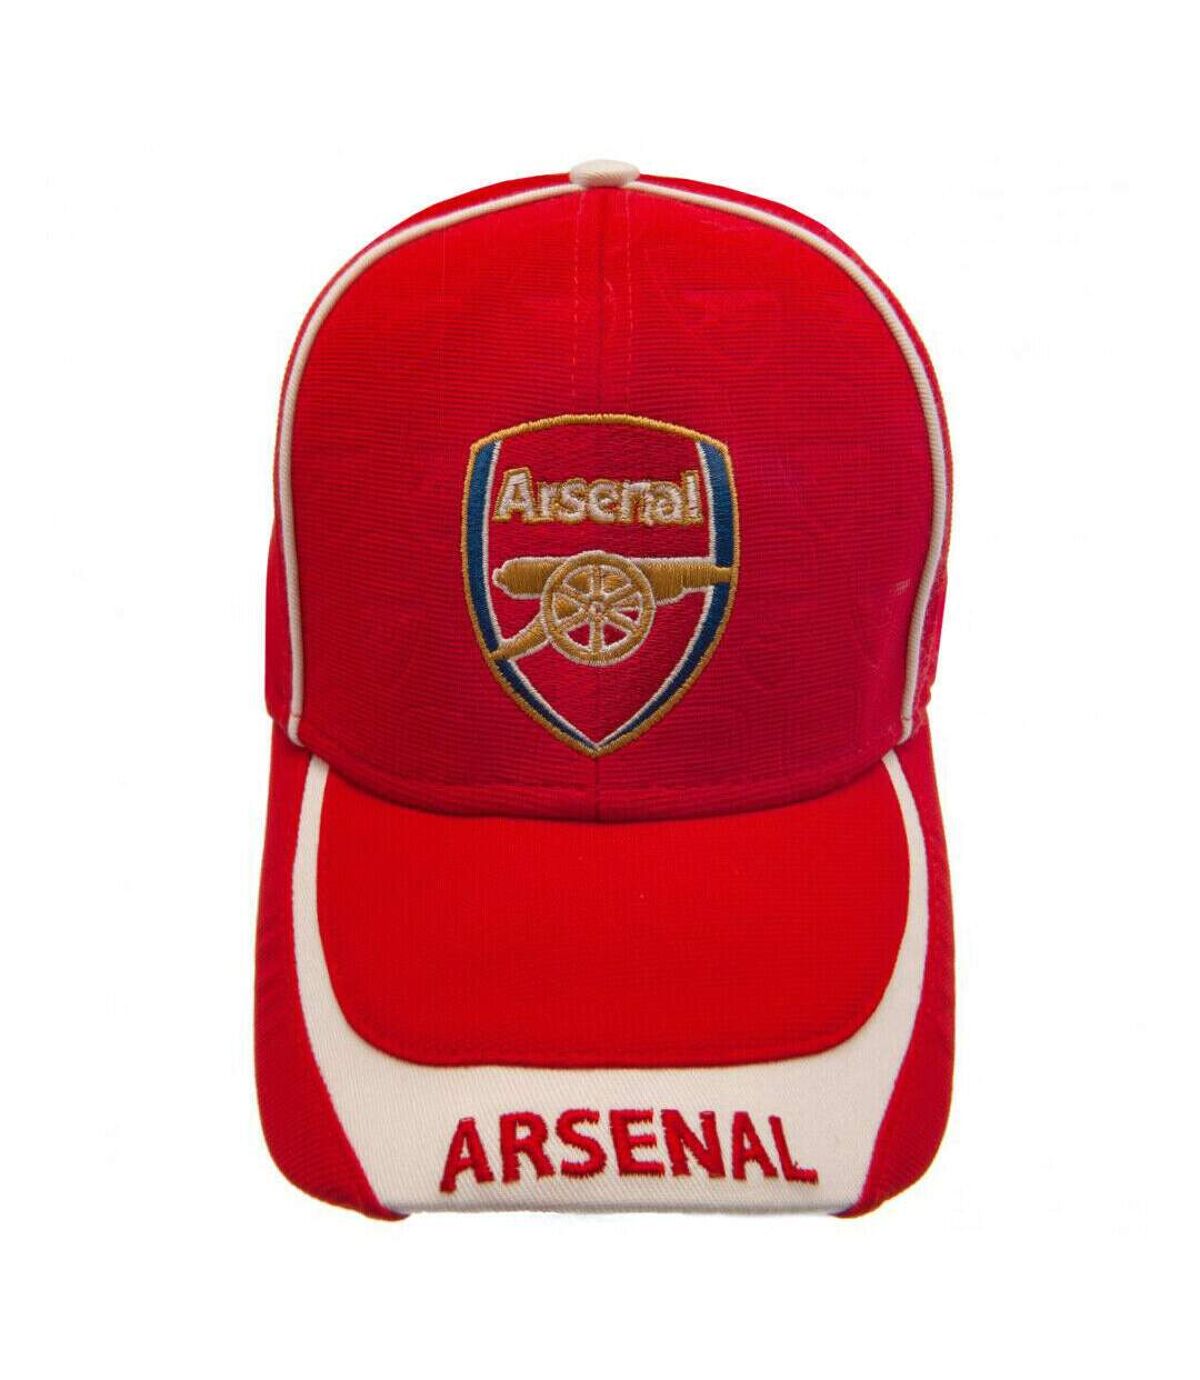 Arsenal FC - Casquette de baseball - Adulte (Rouge) - UTTA7396